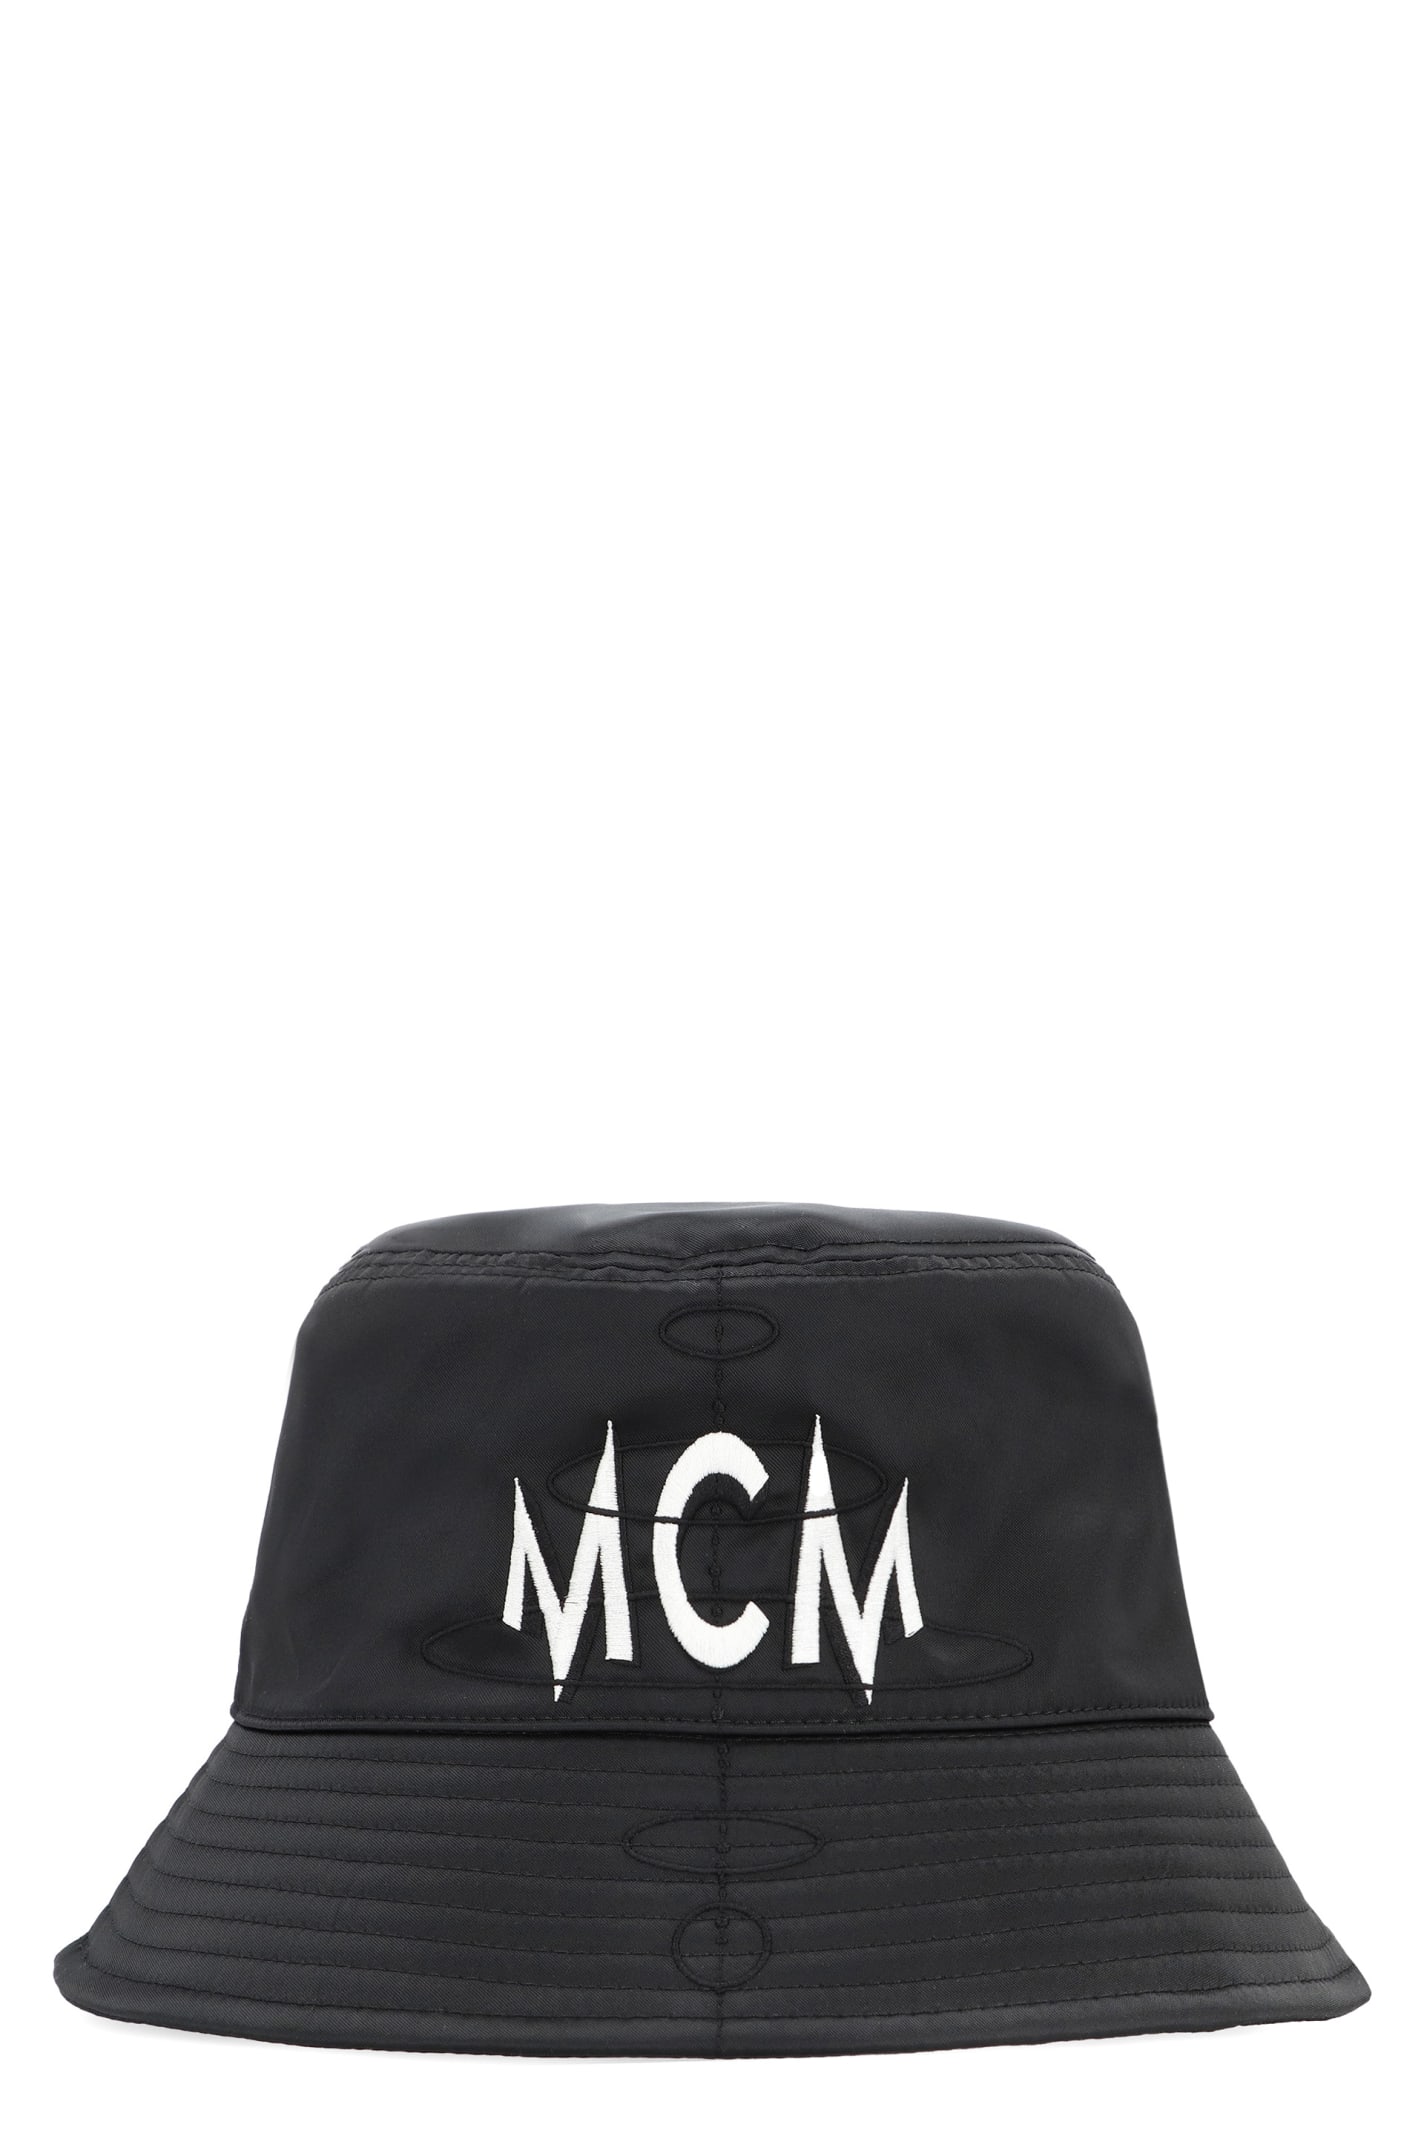 MCM Bucket Hat